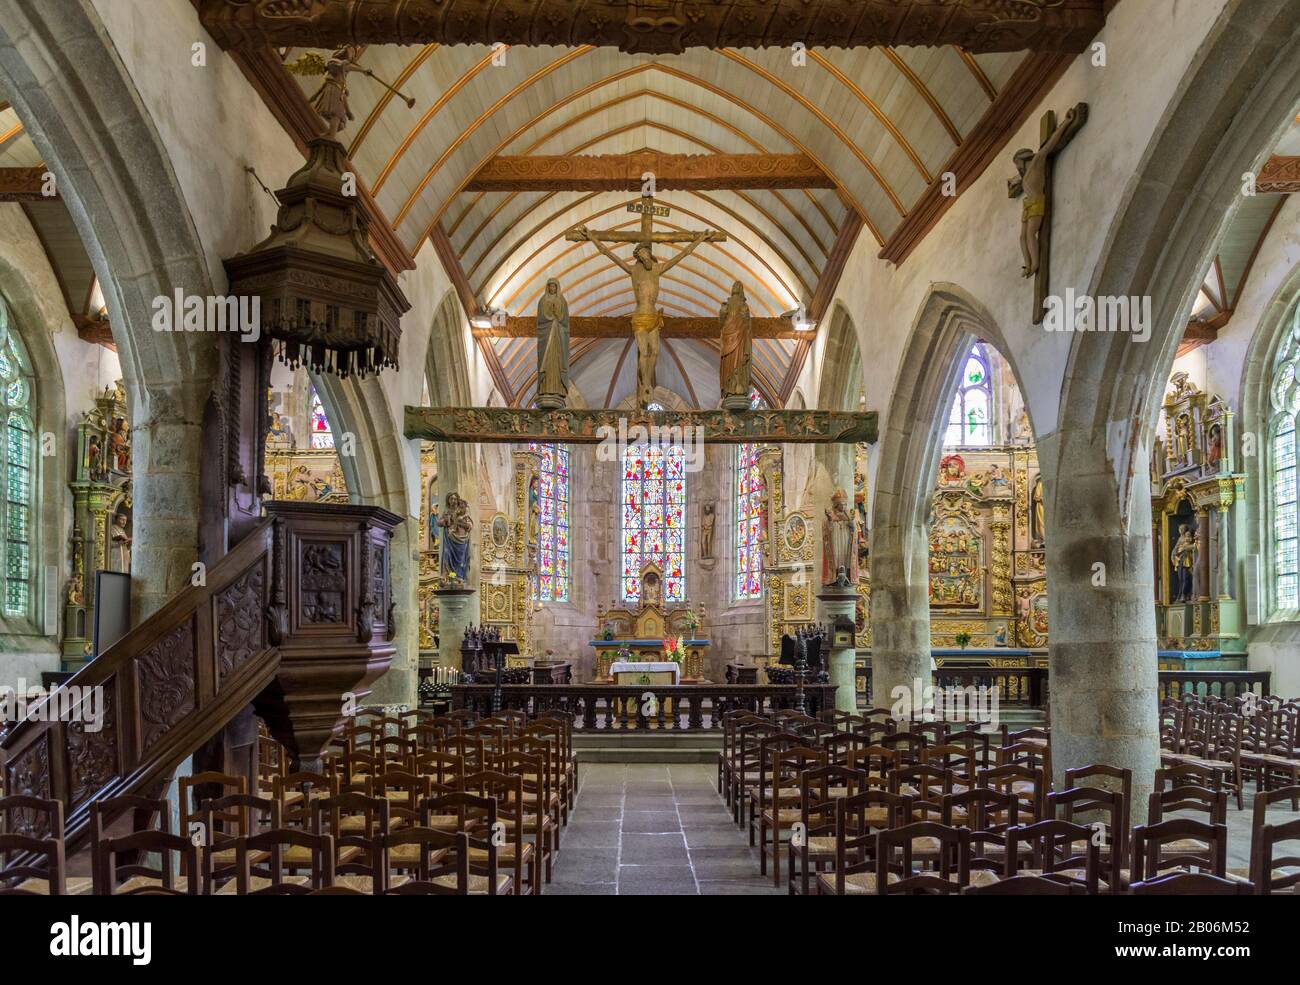 Kirche im Stil des Barock, Lampaul-Guimiliau, Departement Finistere, Frankreich Stockfoto